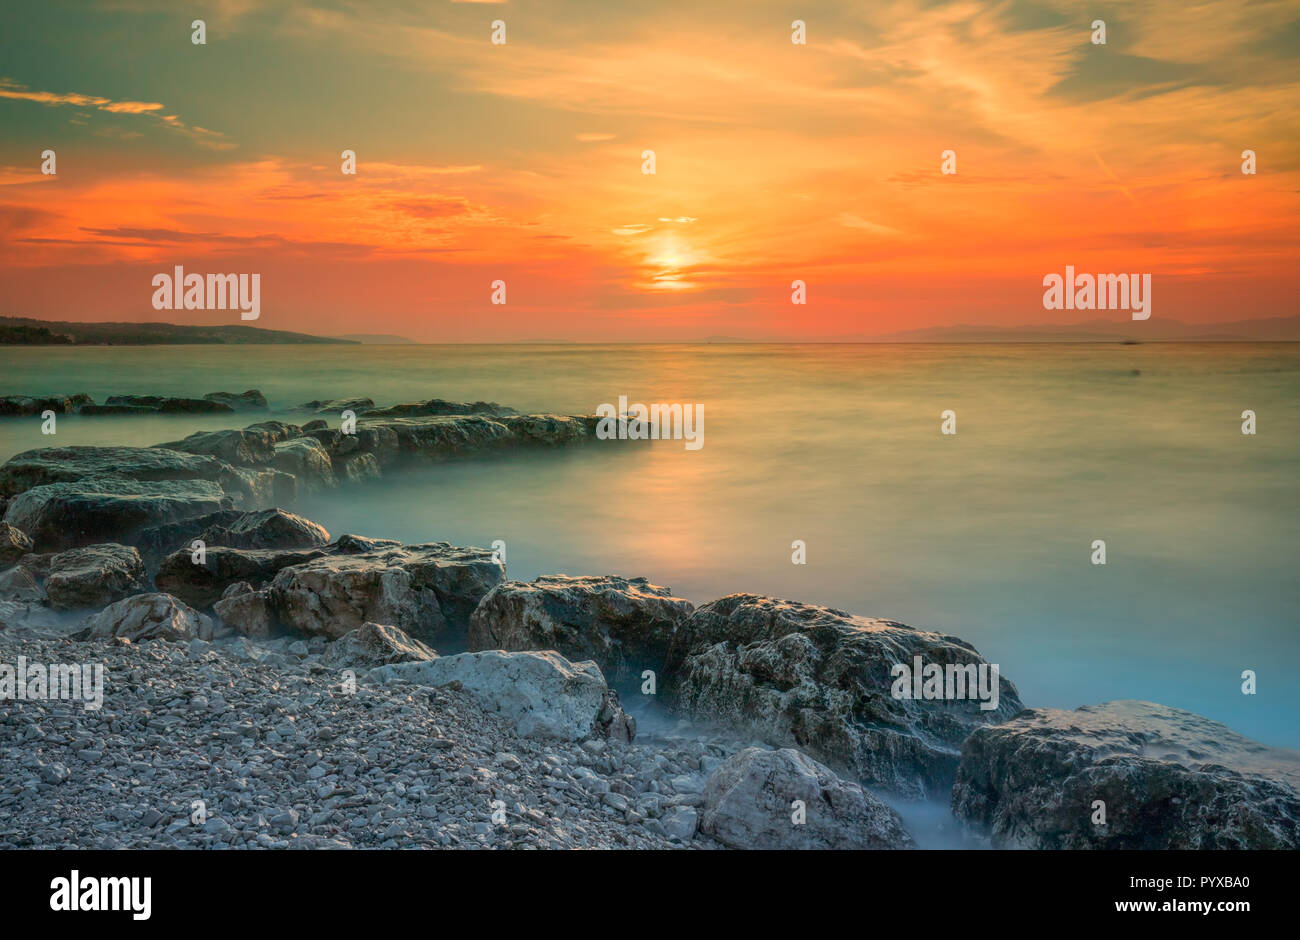 Stunning sunset on Brac island, Croatia, Europe. Stock Photo